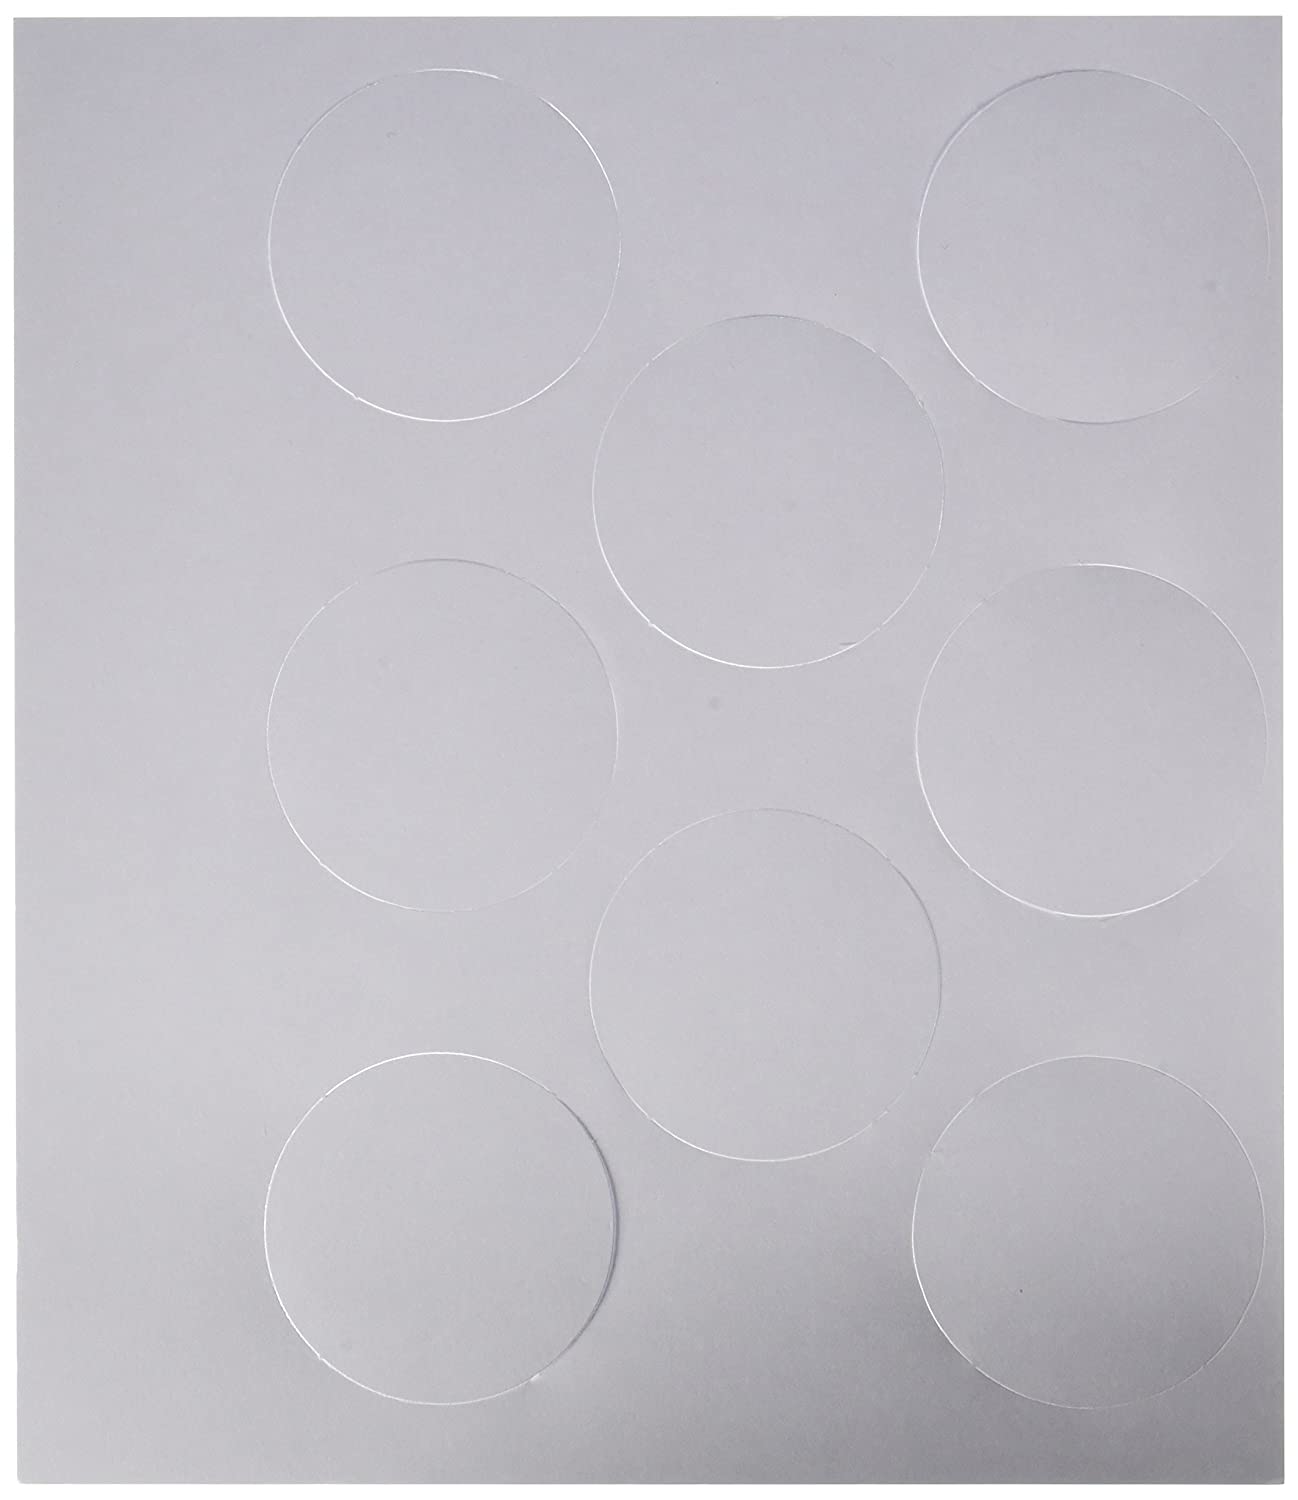 White Paper Circles